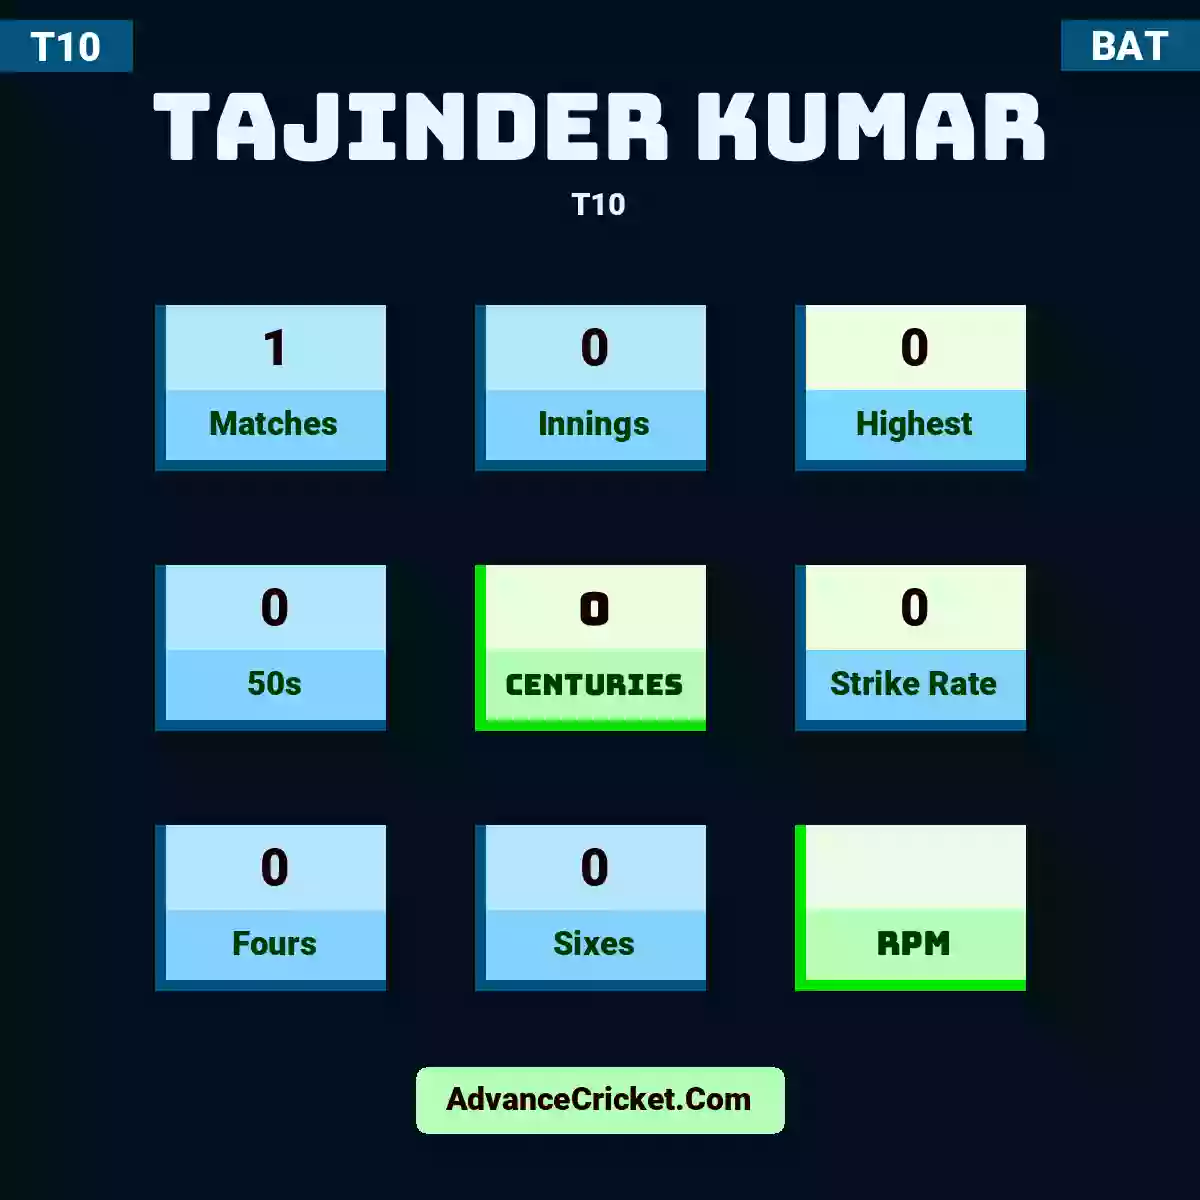 Tajinder Kumar T10 , Tajinder Kumar played 1 matches, scored 0 runs as highest, 0 half-centuries, and 0 centuries, with a strike rate of 0. T.Kumar hit 0 fours and 0 sixes.